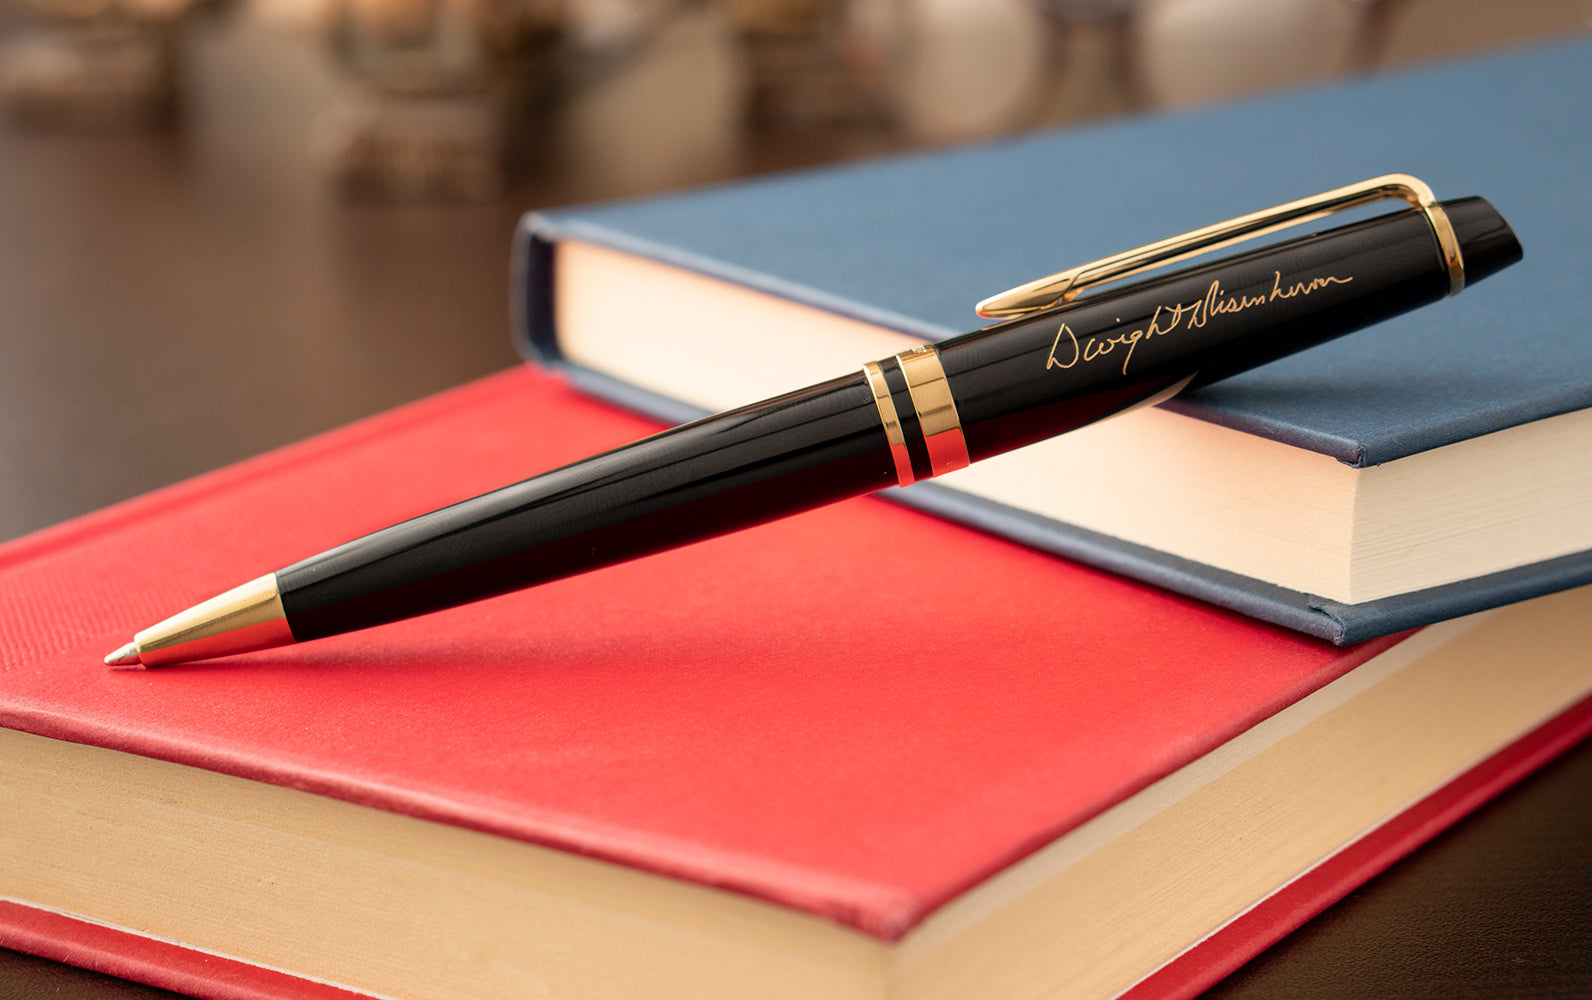 Waterman Expert Ballpoint pen propped on journals